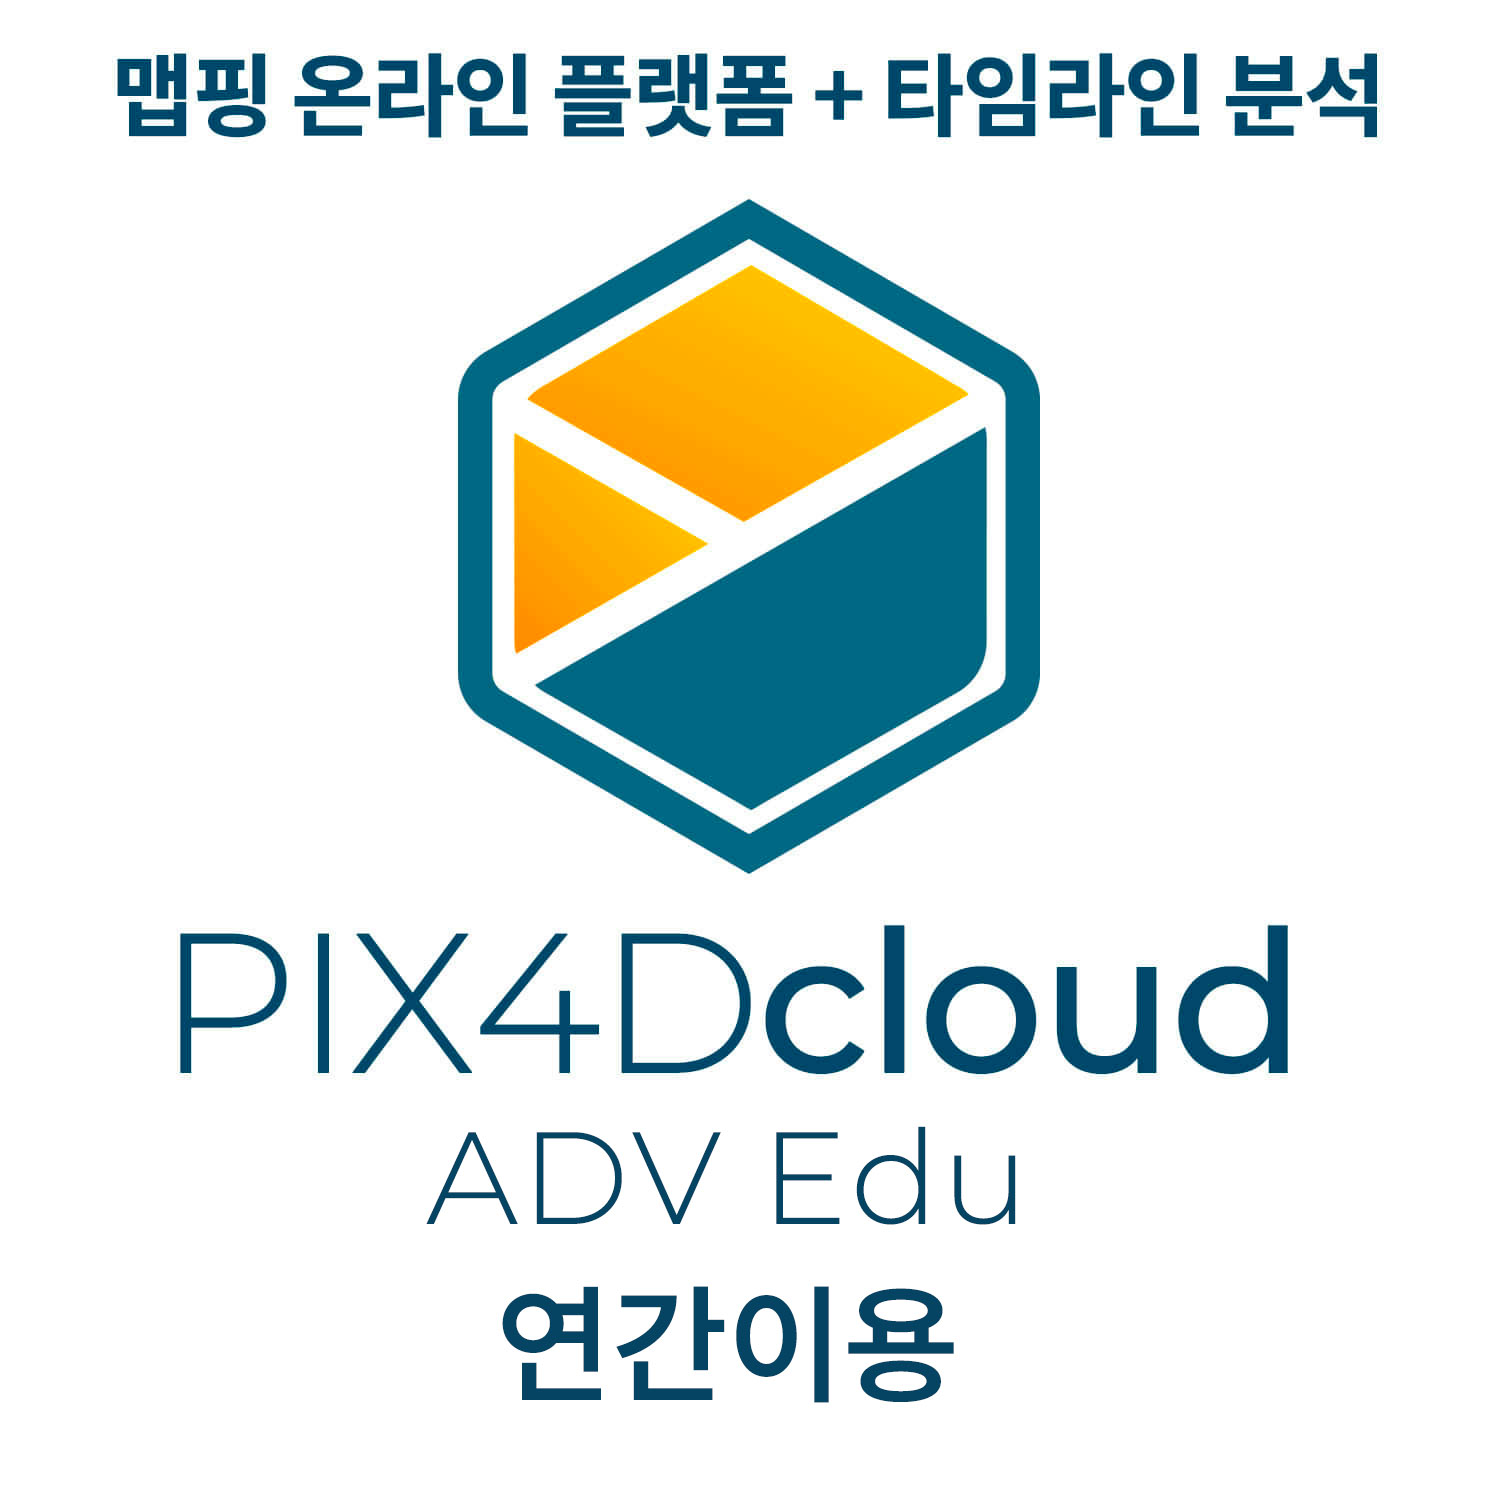 PIX4Dcloud Advanced교육용 연간이용 헬셀